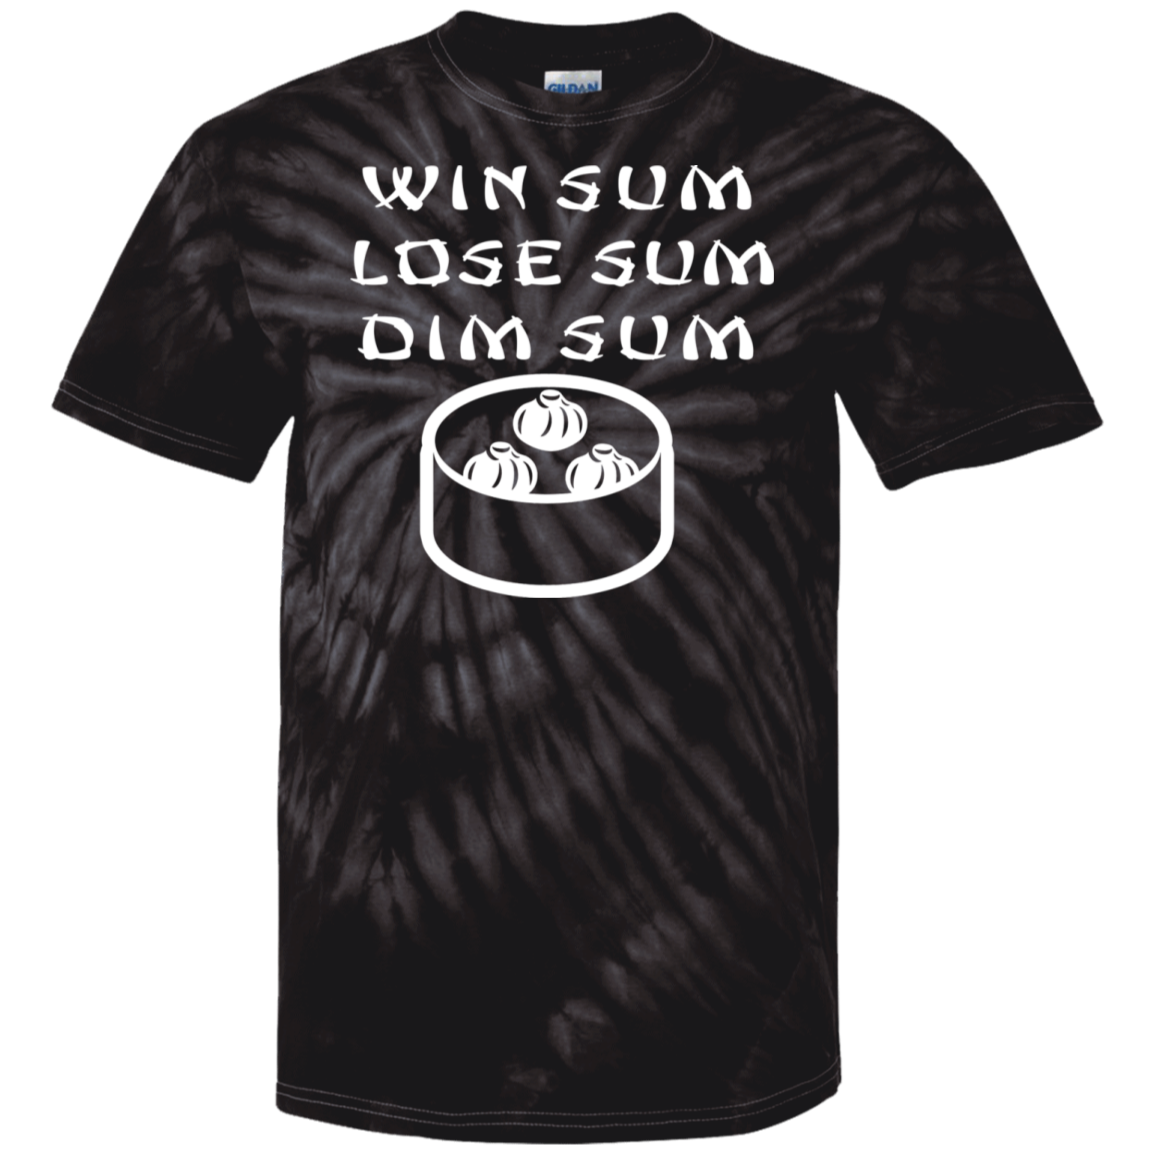 ArtichokeUSA Custom Design. Win Sum Lose Some. Dim Sum. 100% Cotton Tie Dye T-Shirt